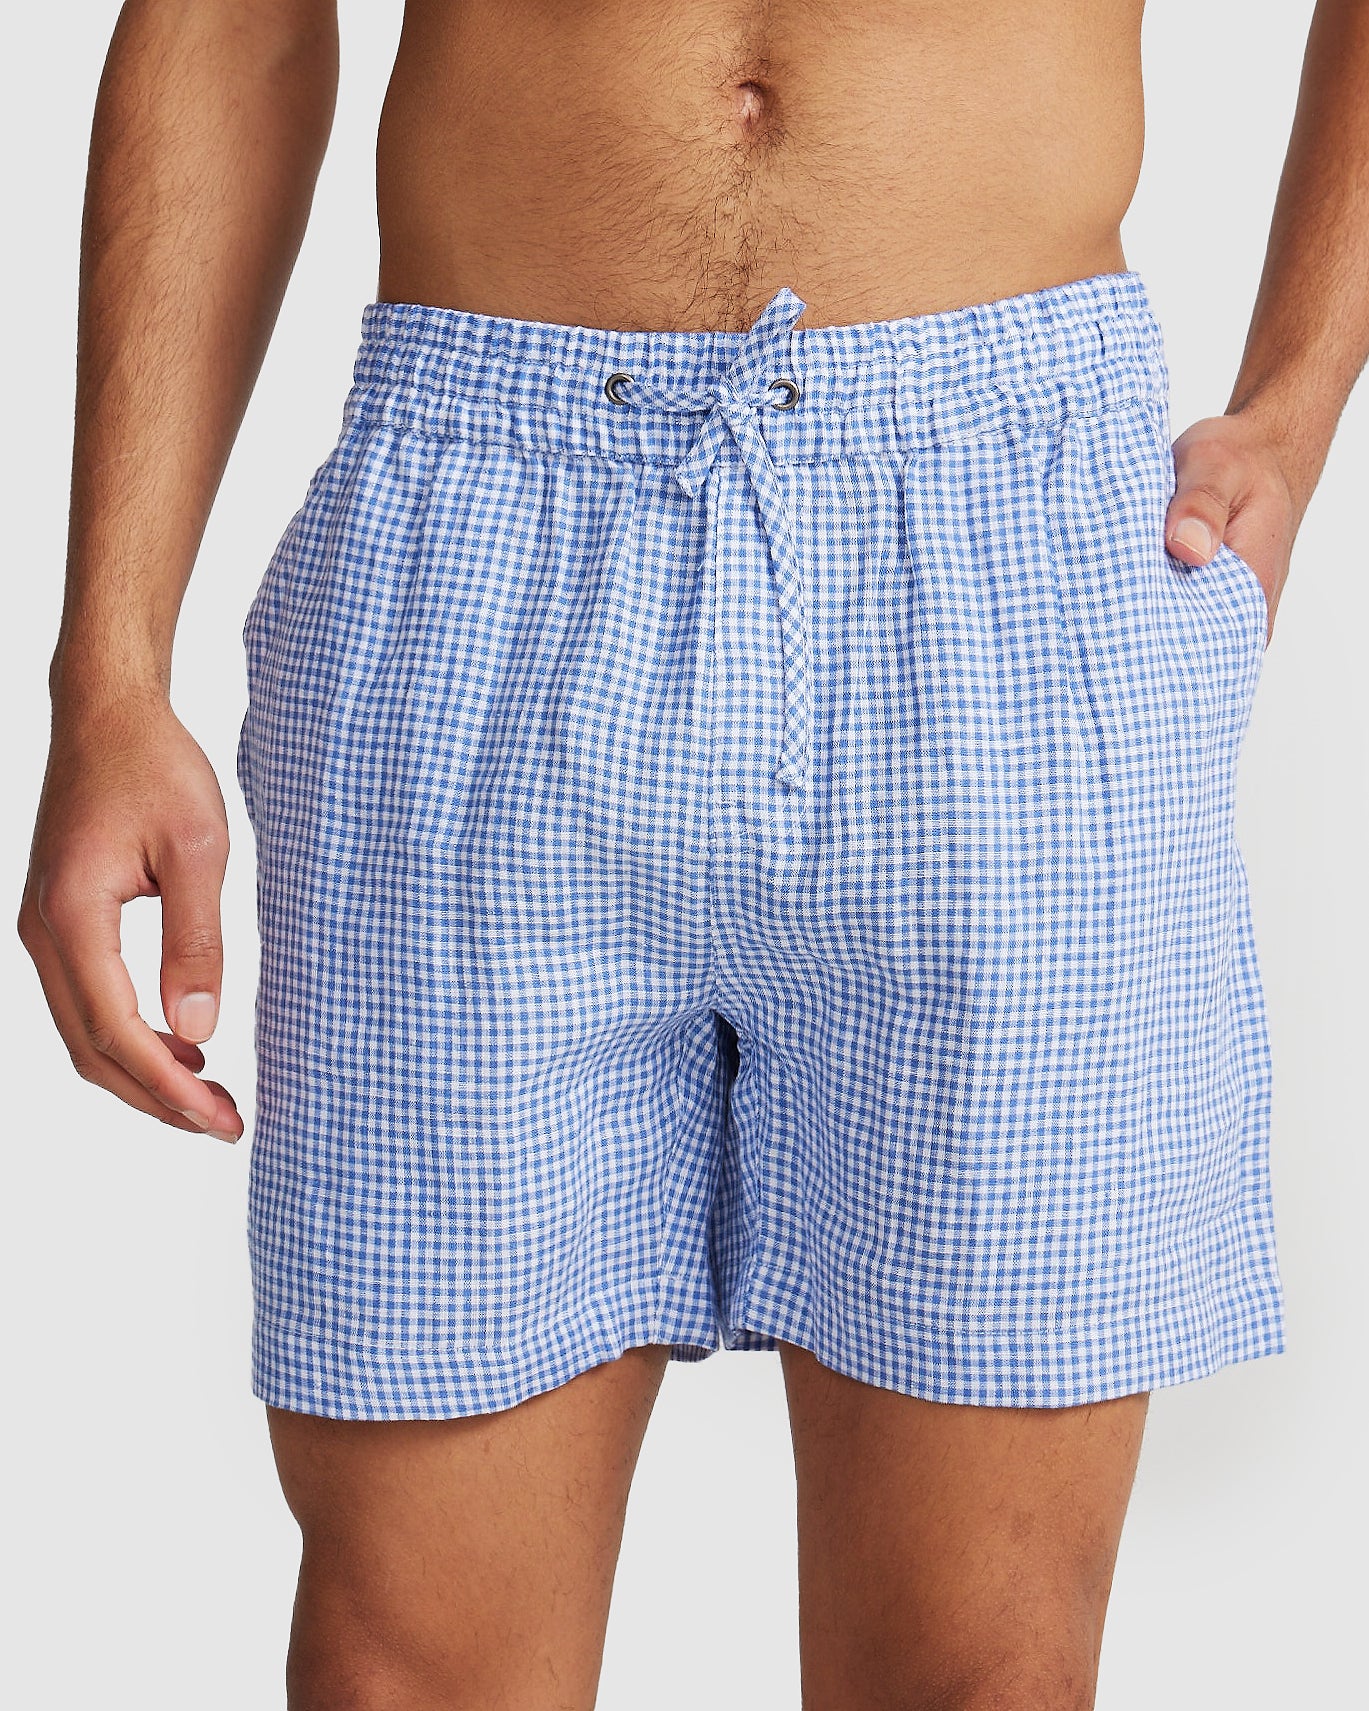 ORTC Mens Linen Shorts